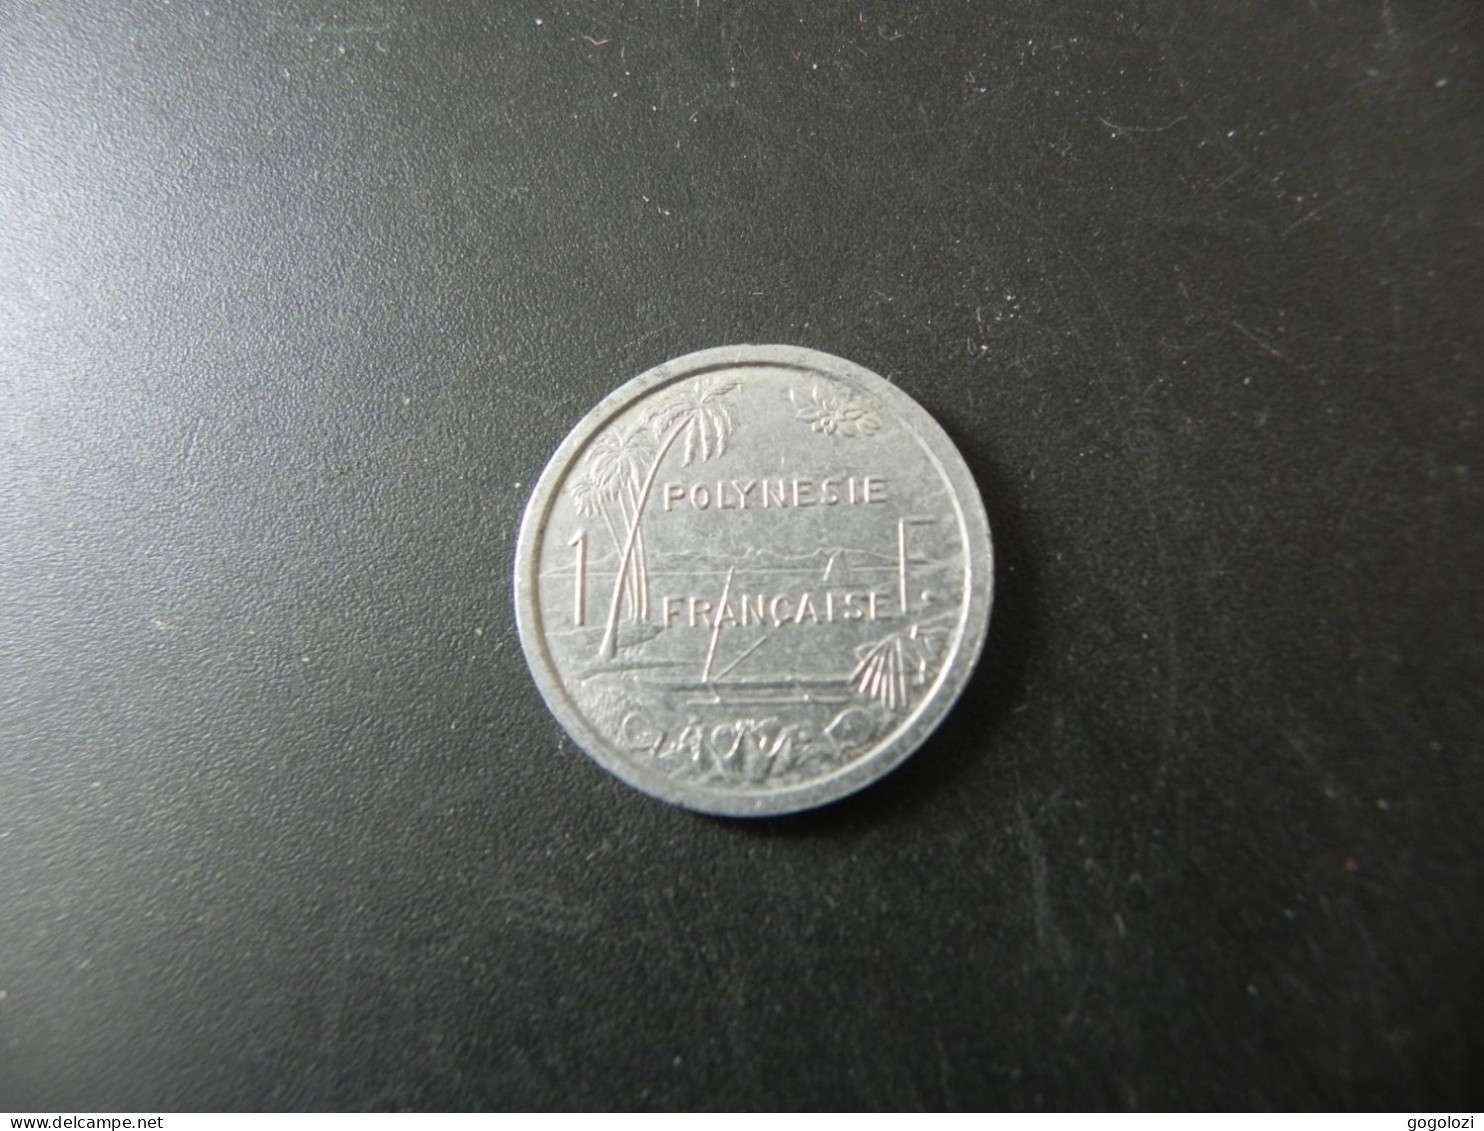 Polynesie Française 1 Franc 1987 - French Polynesia